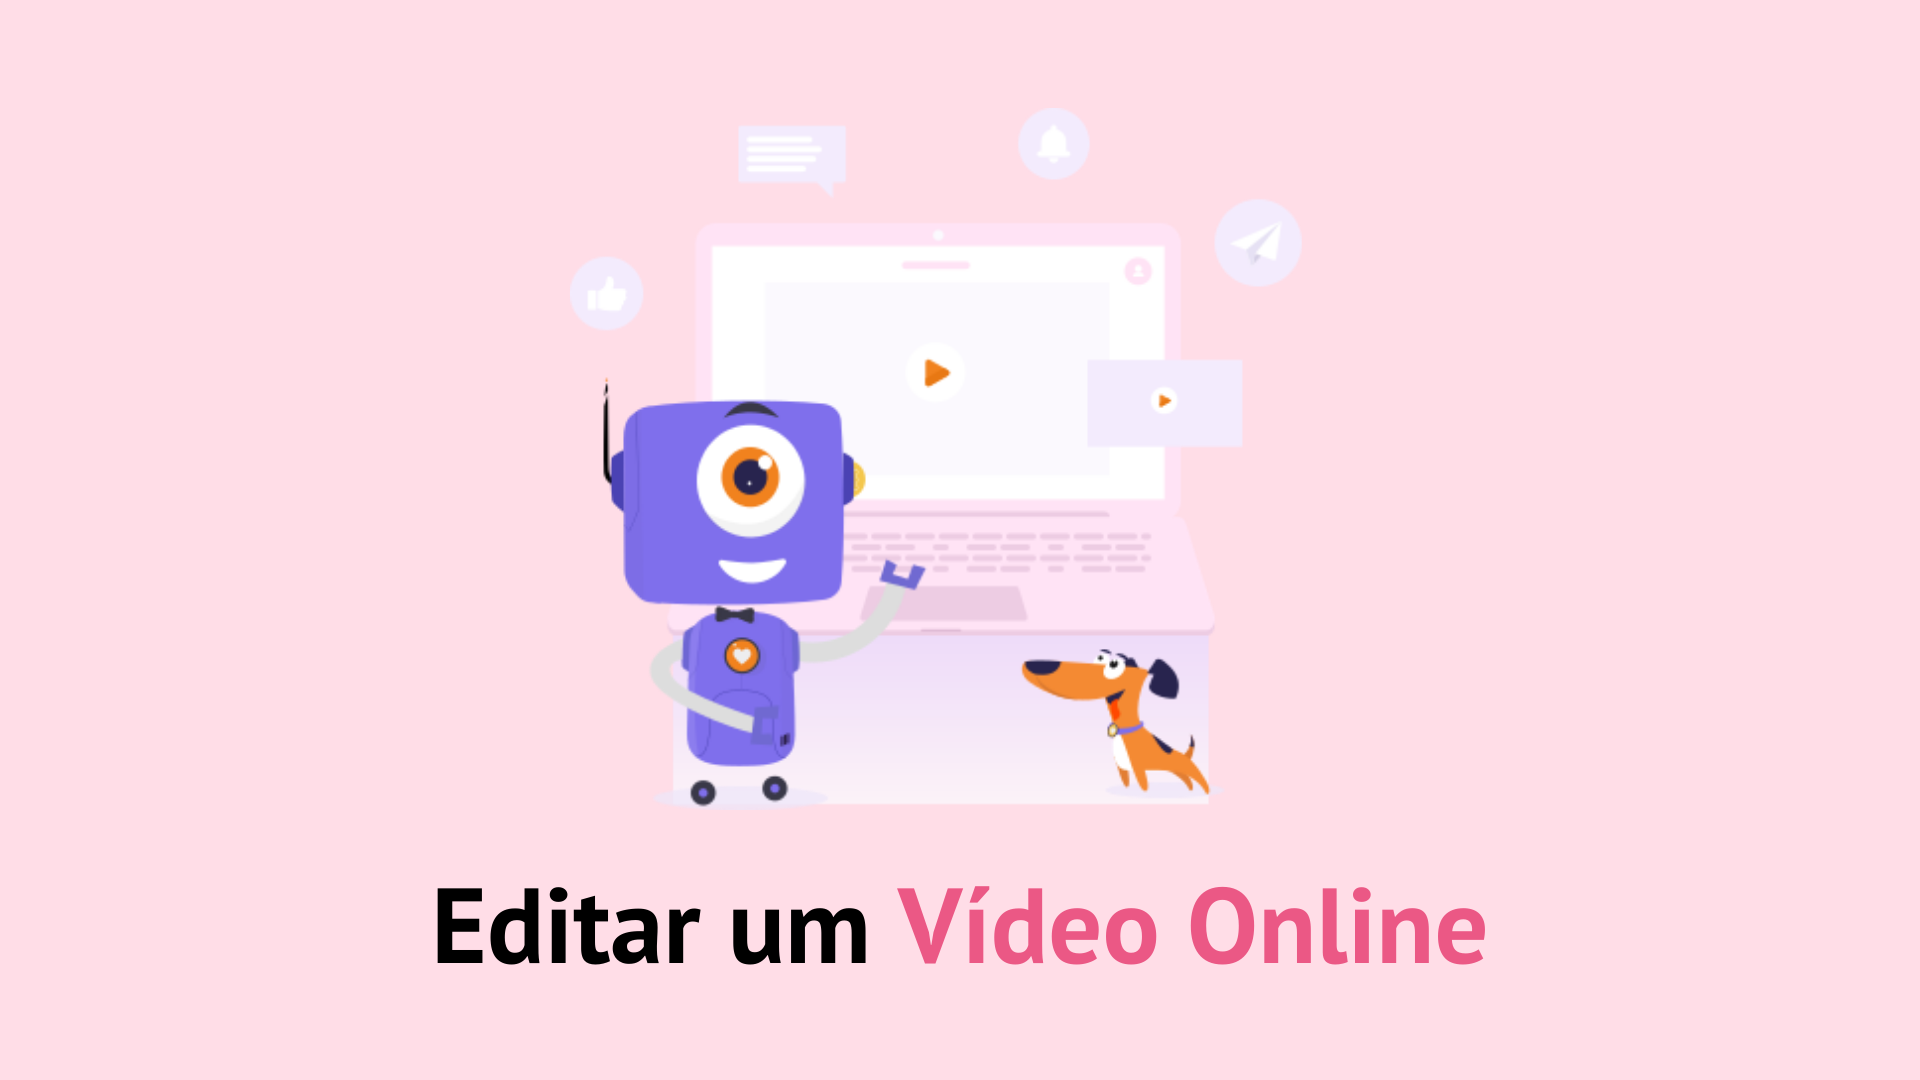 Online Video editor